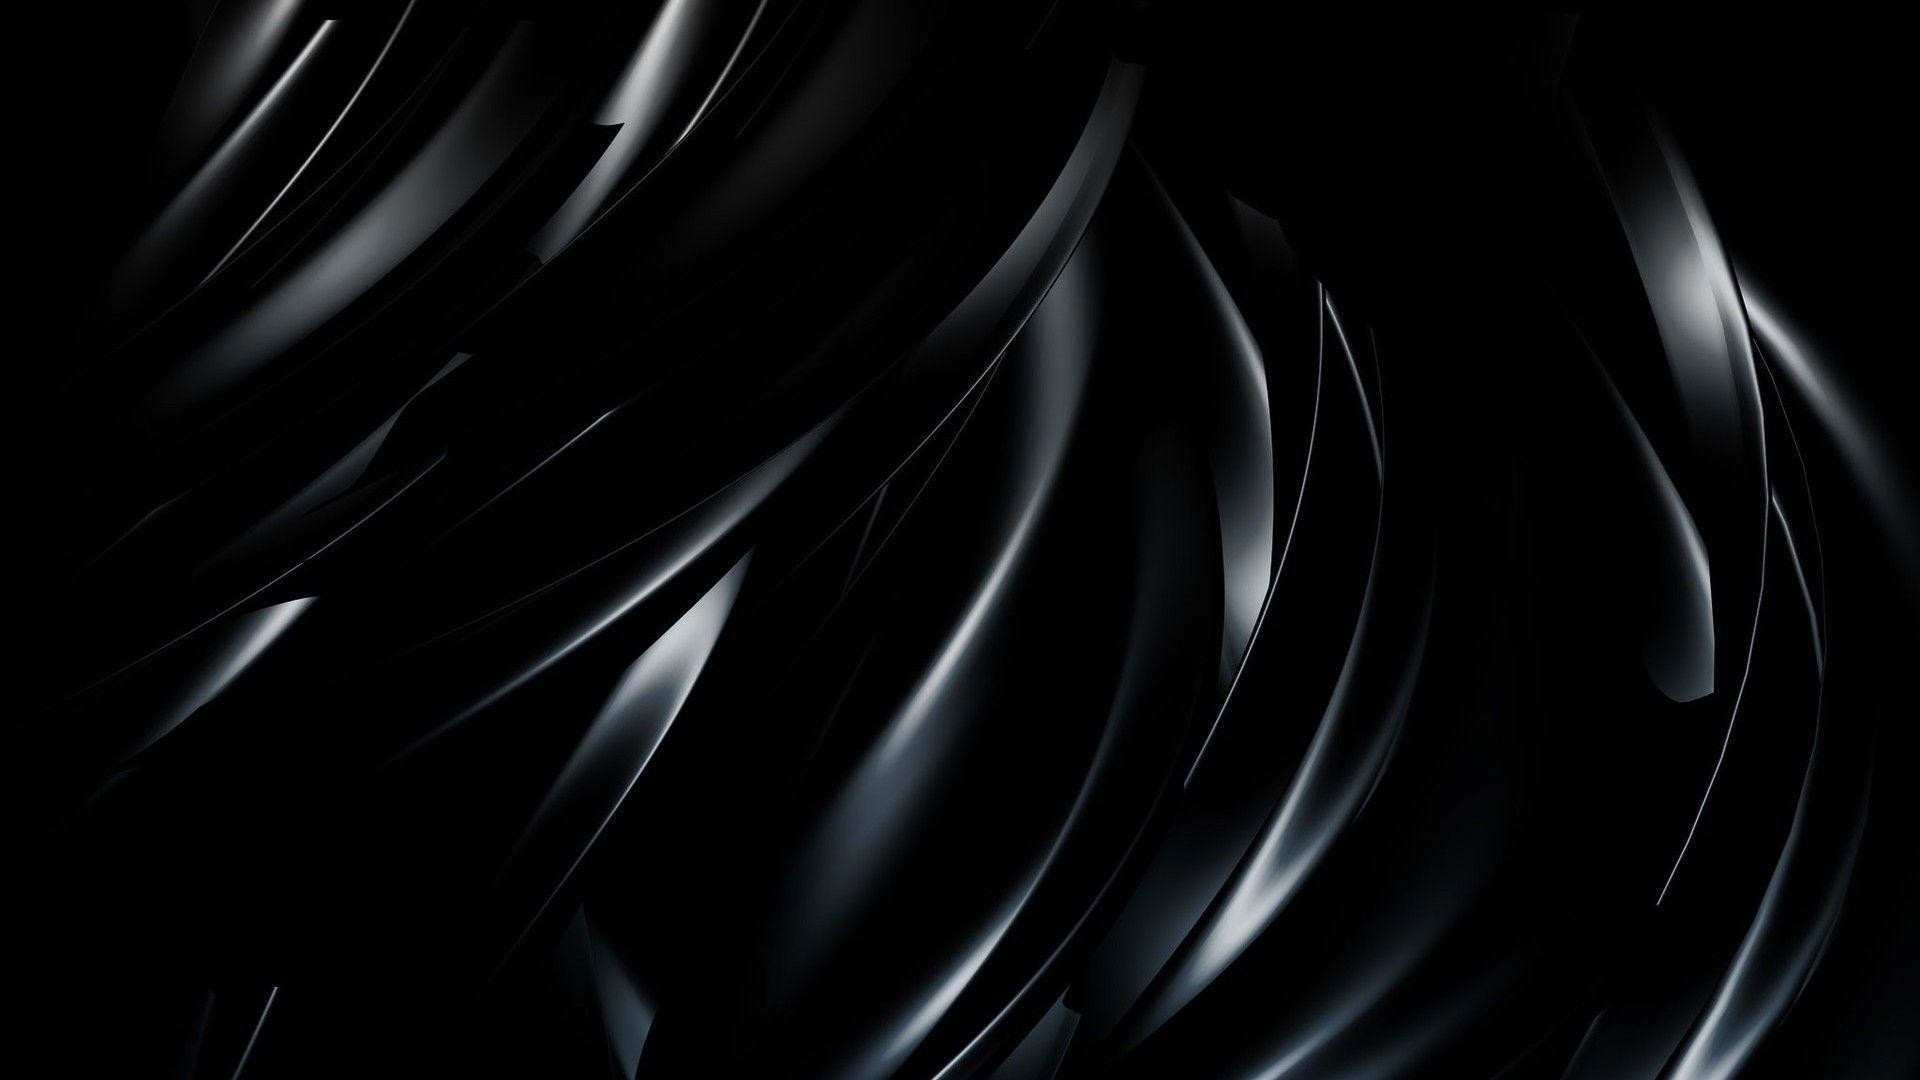 Black Abstract Wallpaper Hd 1080P 11 HD Wallpapers lzamgs